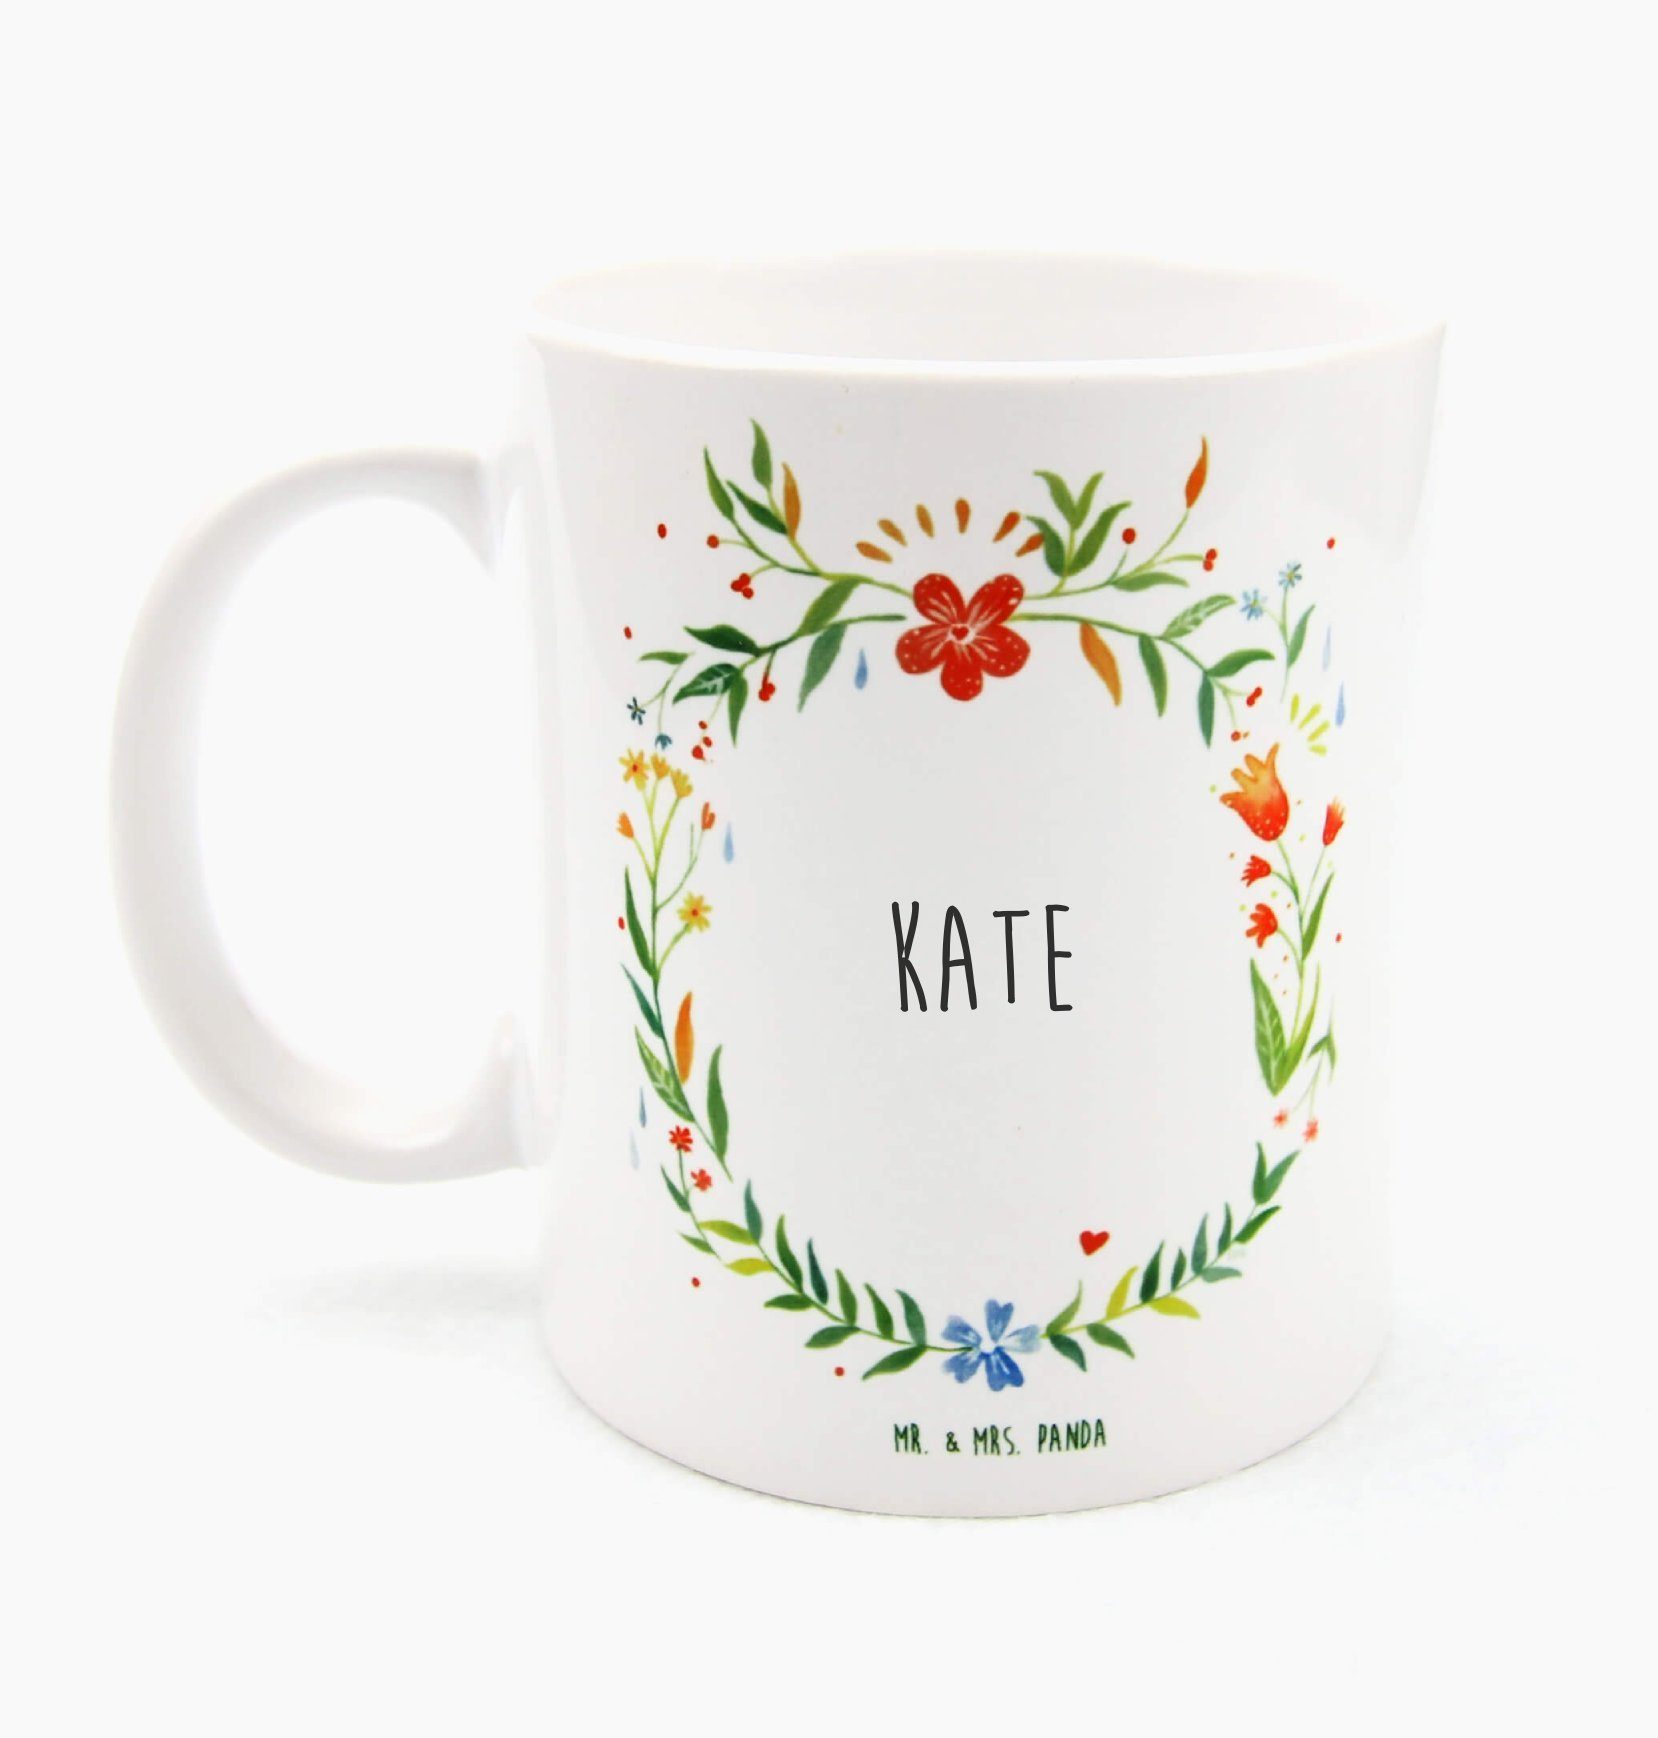 Mr. & Mrs. Panda Tasse Kate - Geschenk, Kaffeetasse, Tasse Motive, Teetasse, Geschenk Tasse, Keramik